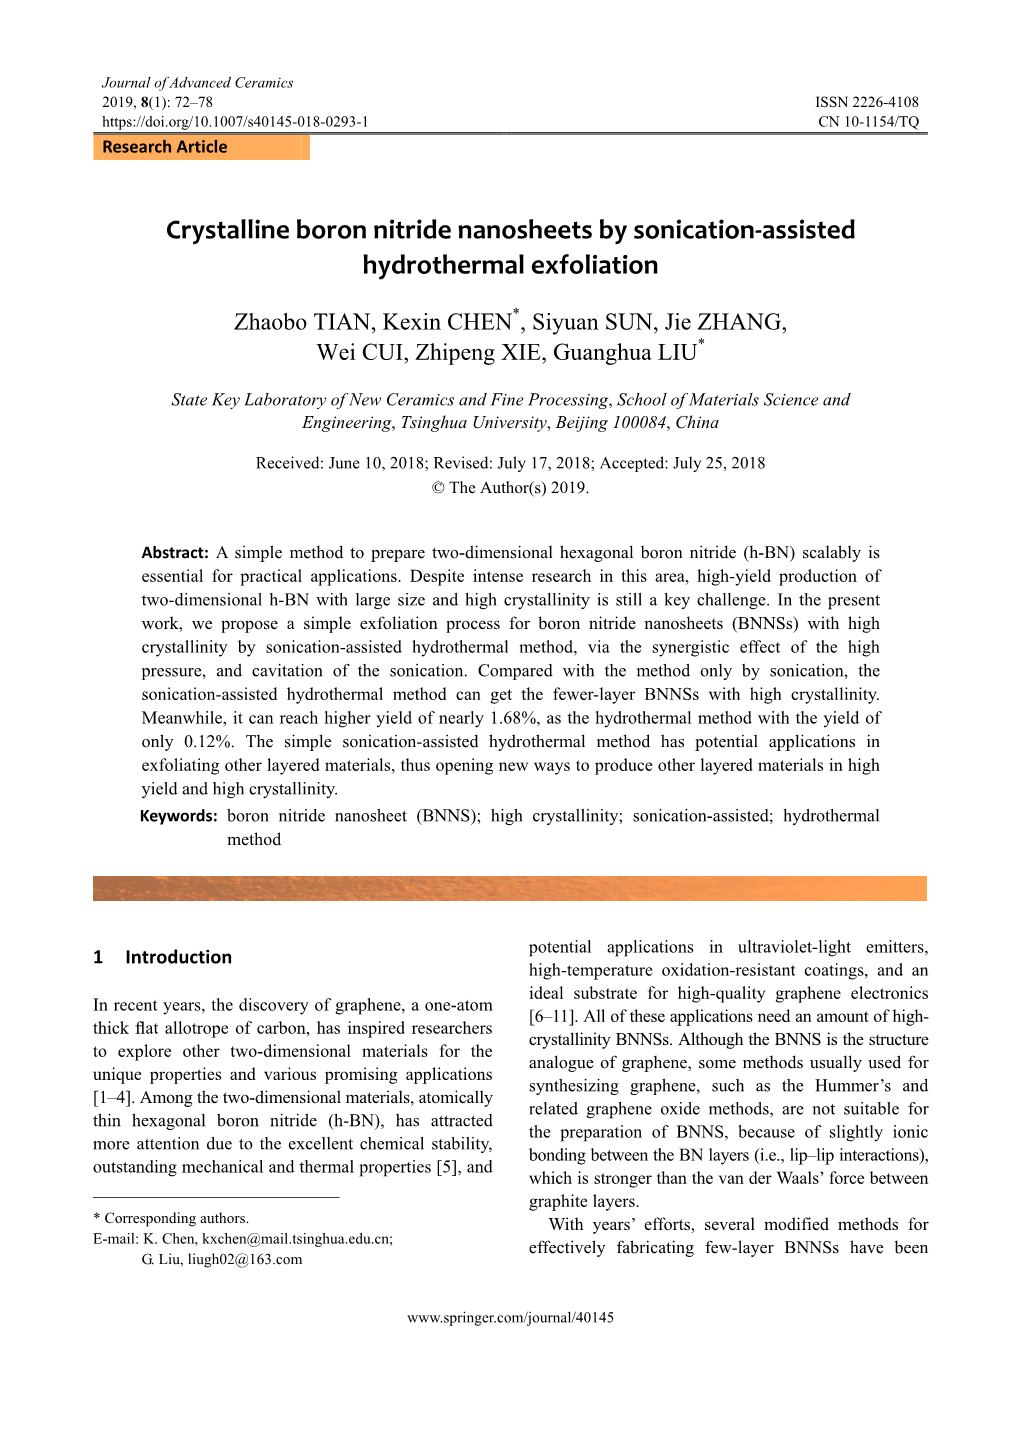 Crystalline Boron Nitride Nanosheets by Sonication-Assisted Hydrothermal Exfoliation